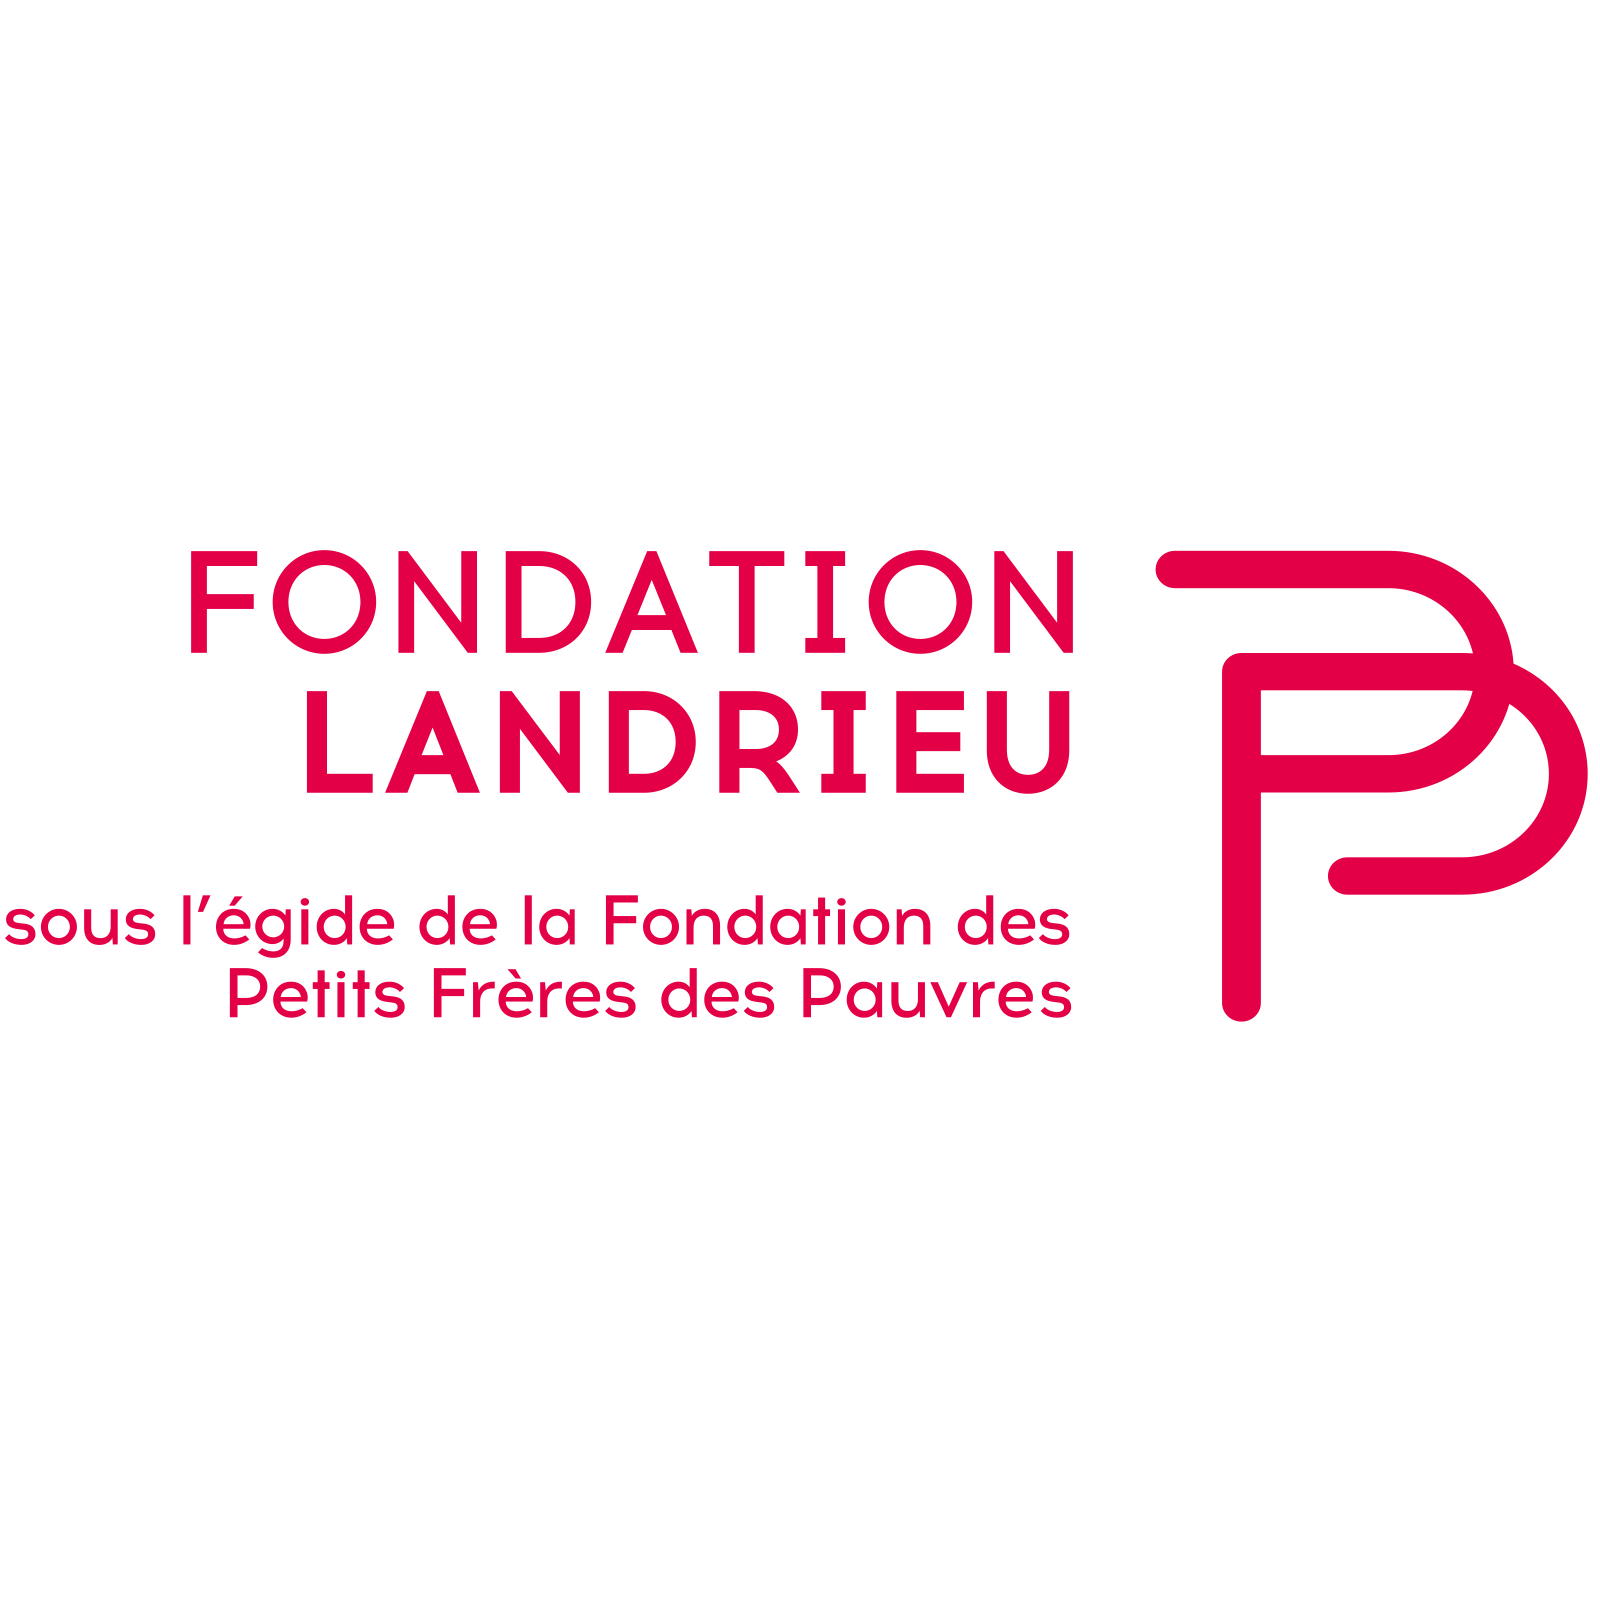 Fondation Landrieu